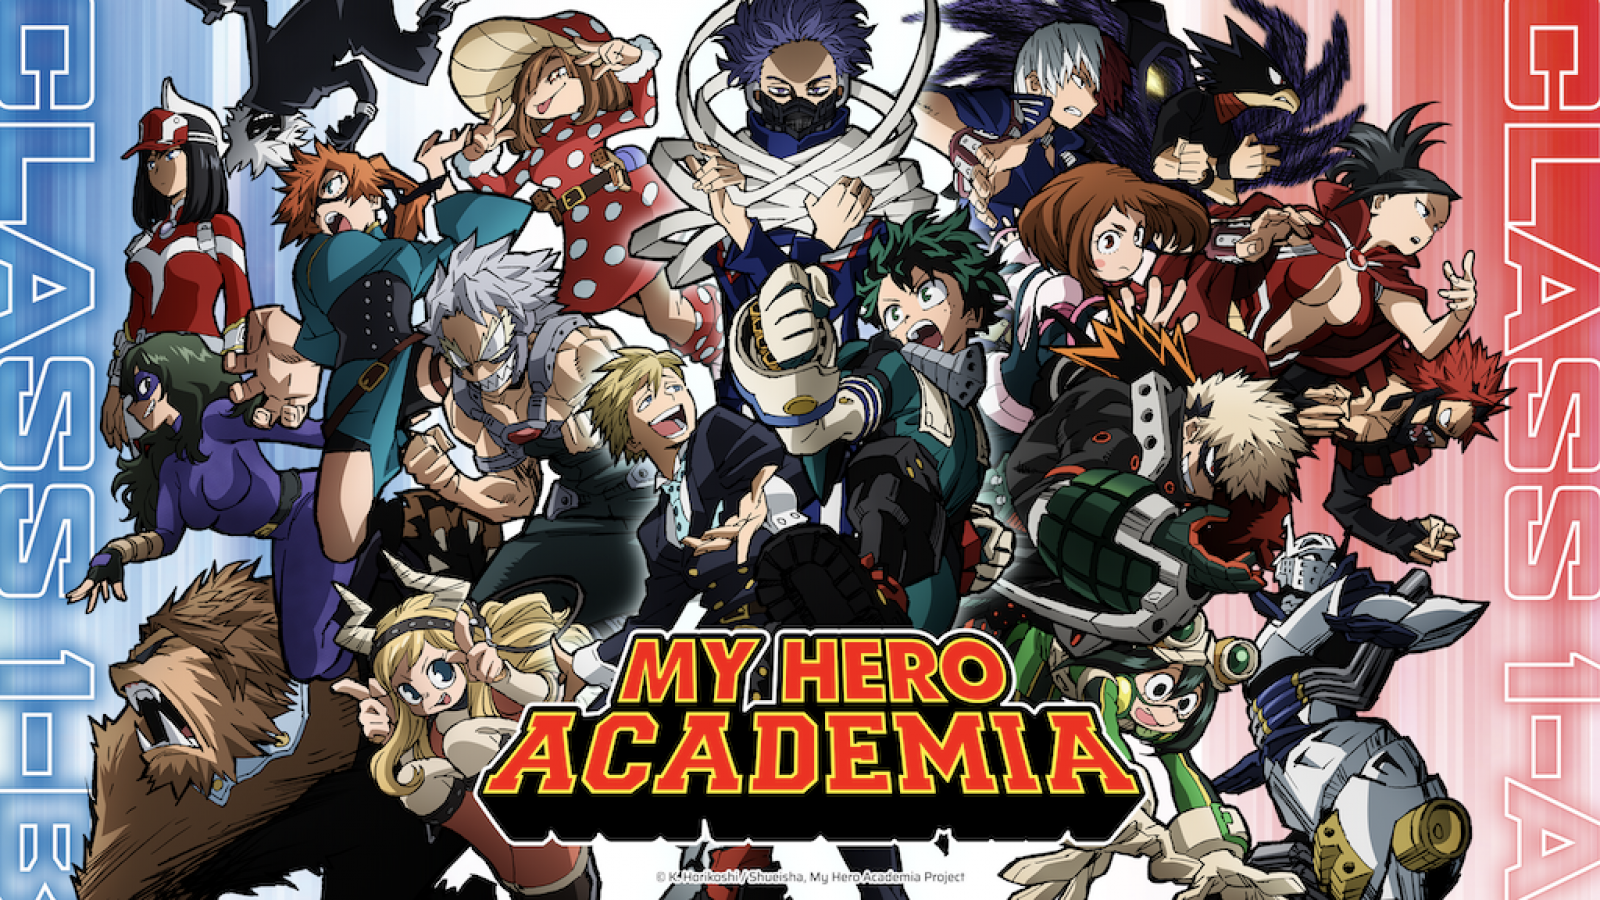 My Hero Academia Season 4 - watch episodes streaming online